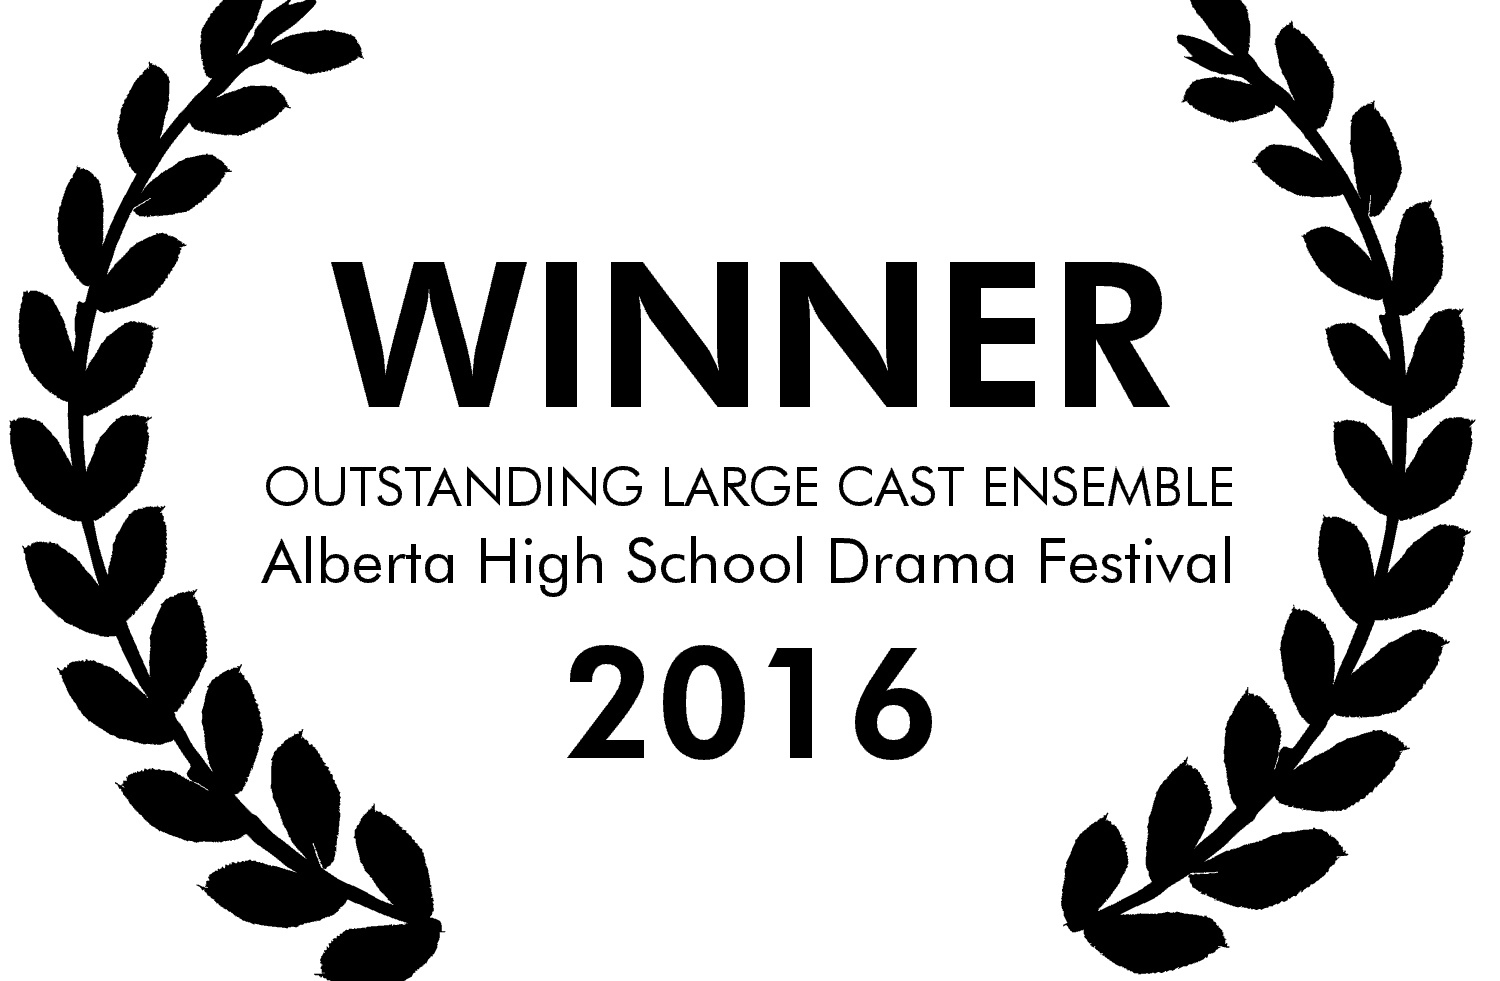 Winner - Outstanding Large Cast Ensemble, Alberta High School Drama Festival, Super Sidekick: The Musical - musicals for kids, children's theatre, TYA, shows for kids, kids shows